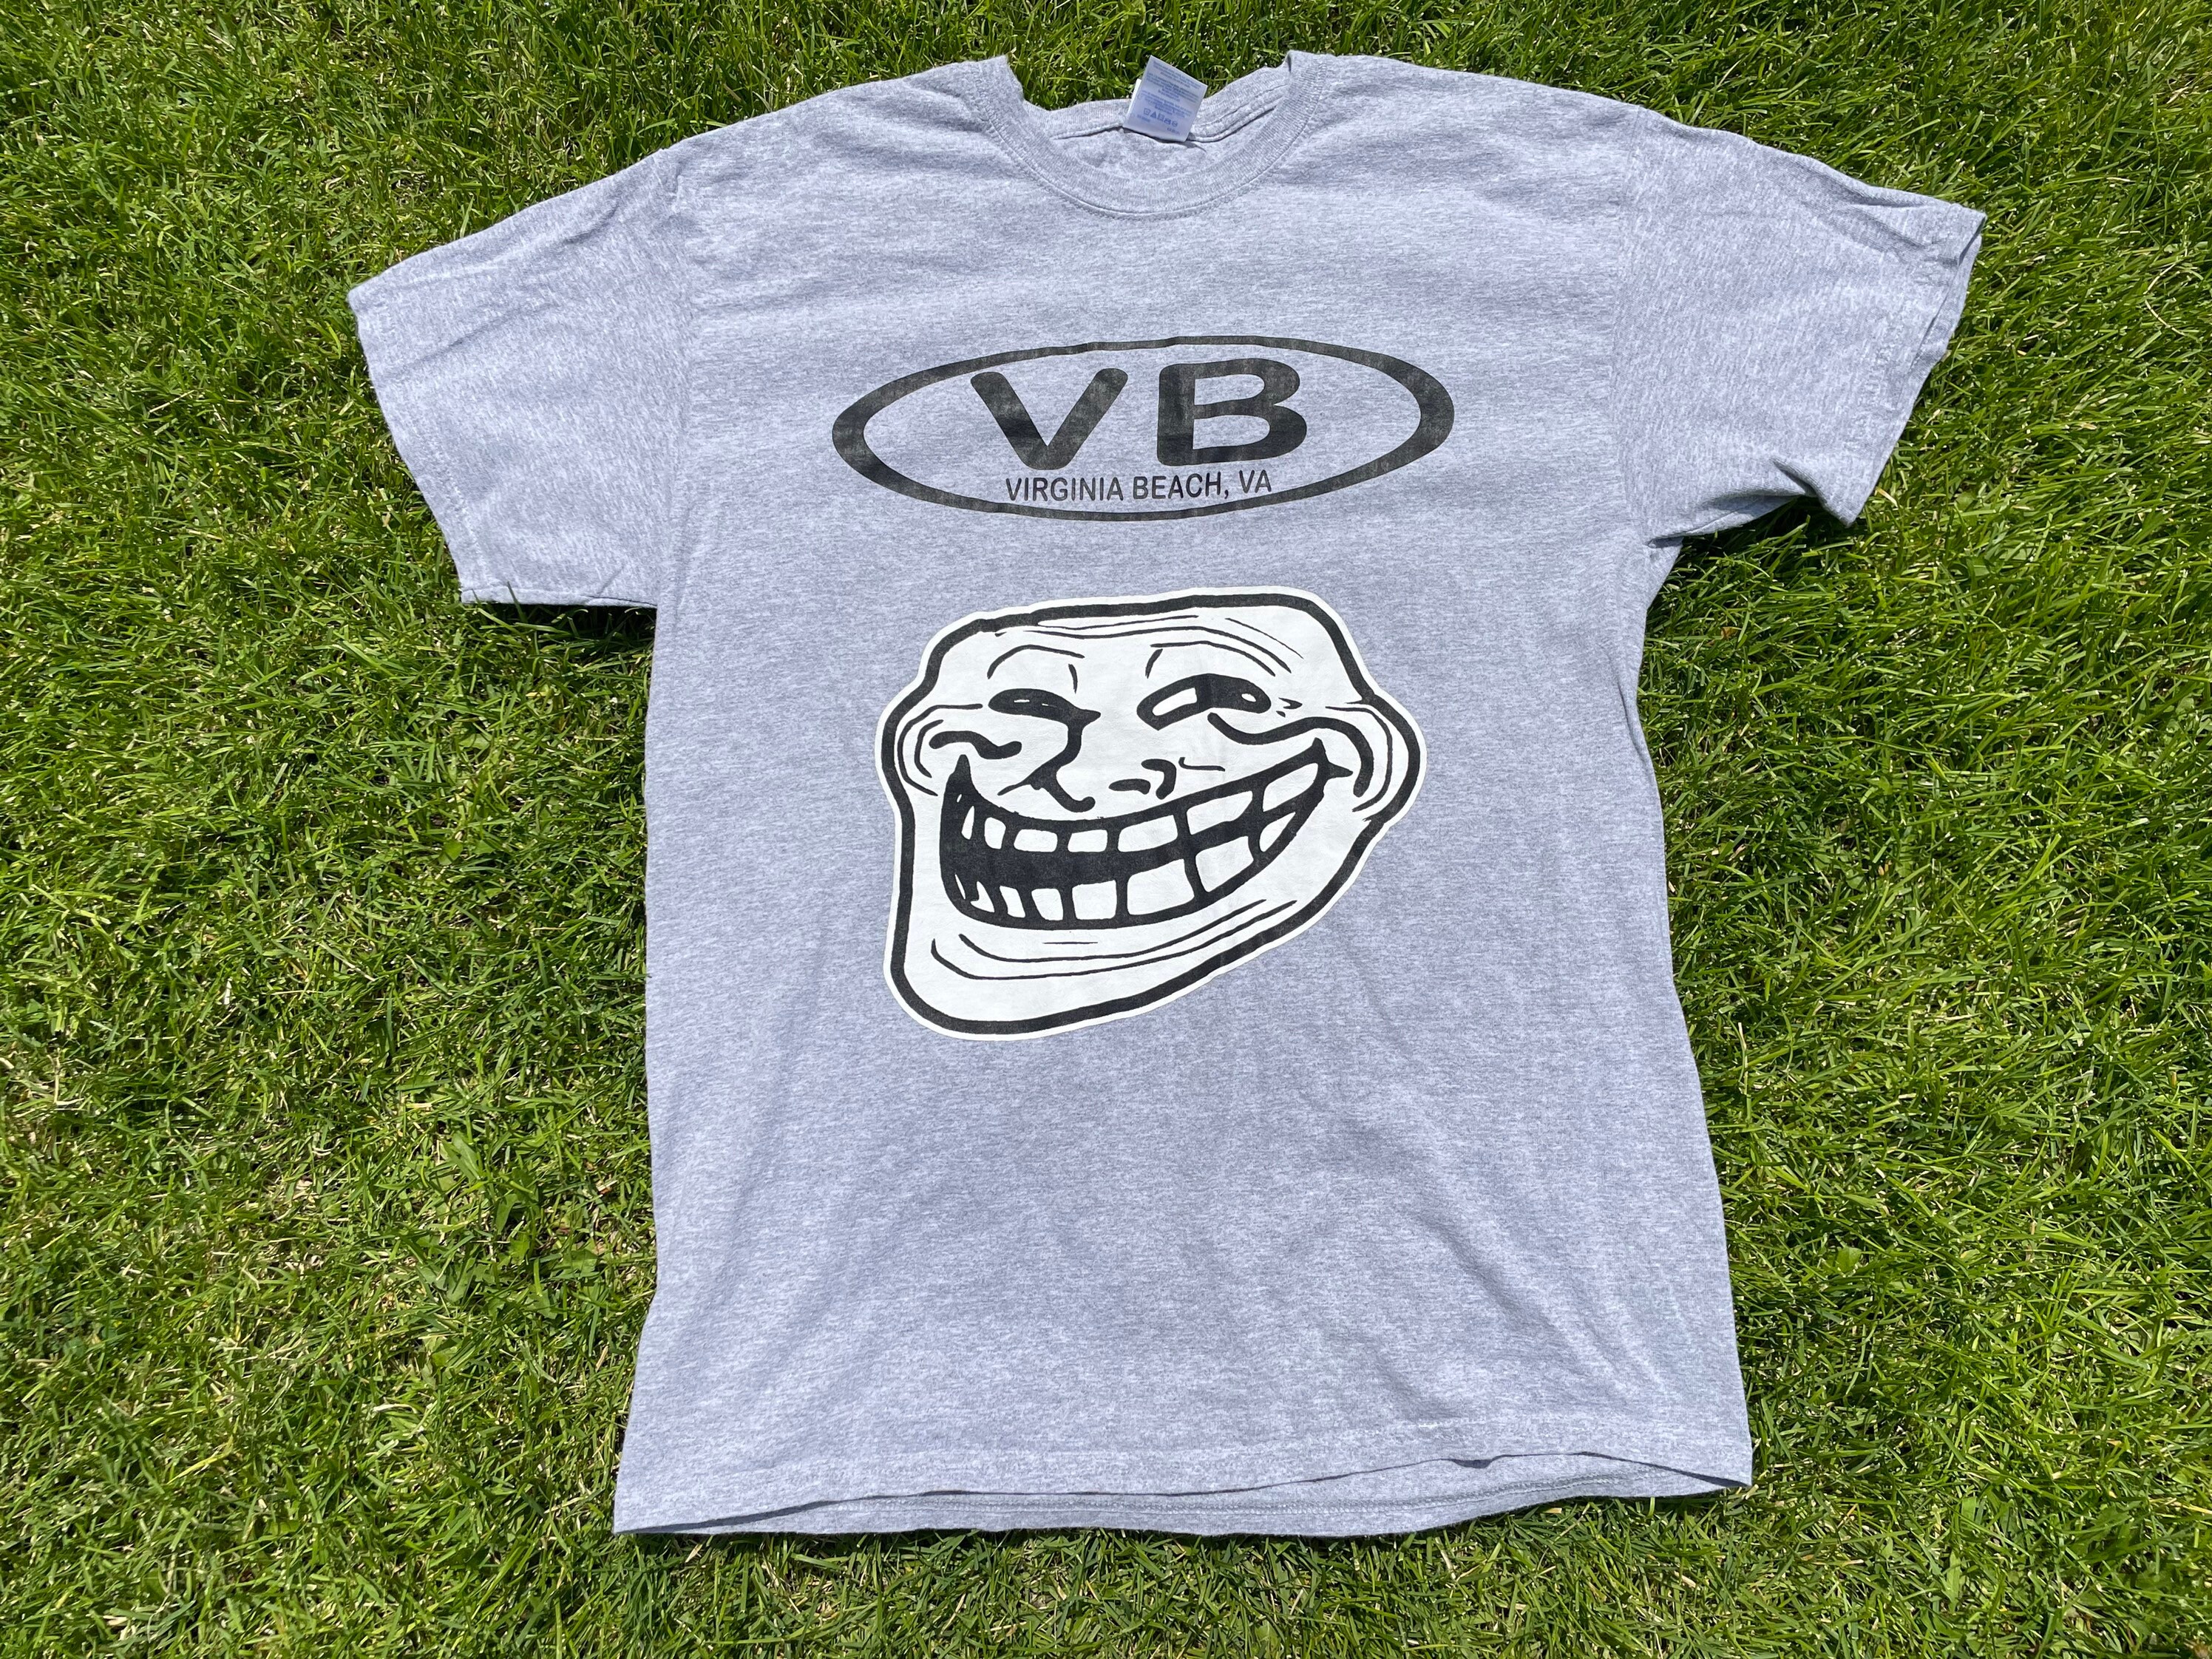 Embroidered Troll Face T Shirt Unisex Rage Comic Meme Shirt -  Finland